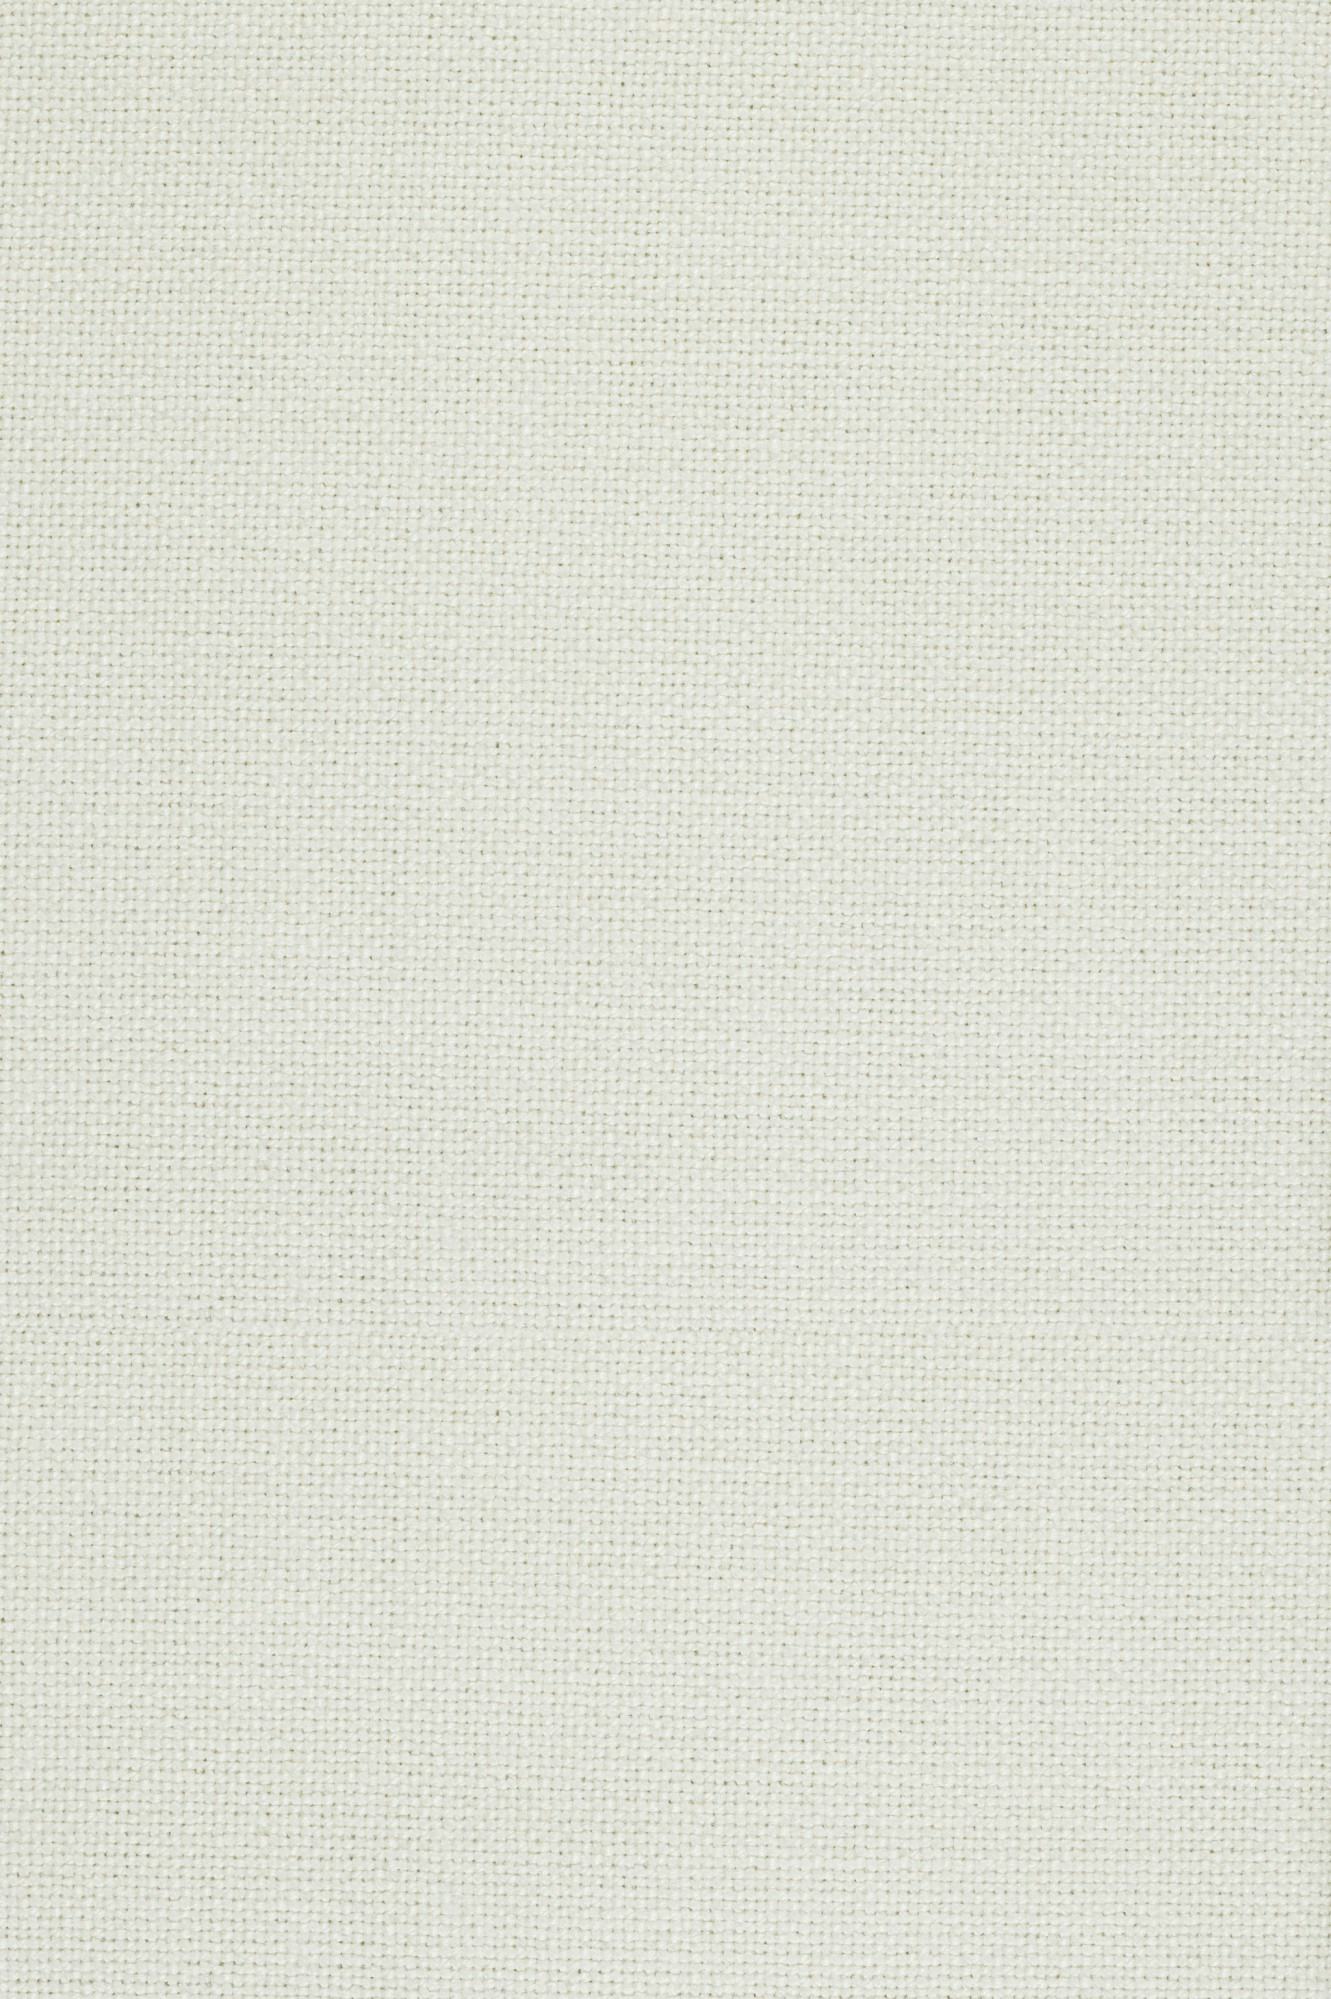 Fabric sample Hallingdal 65 100 white